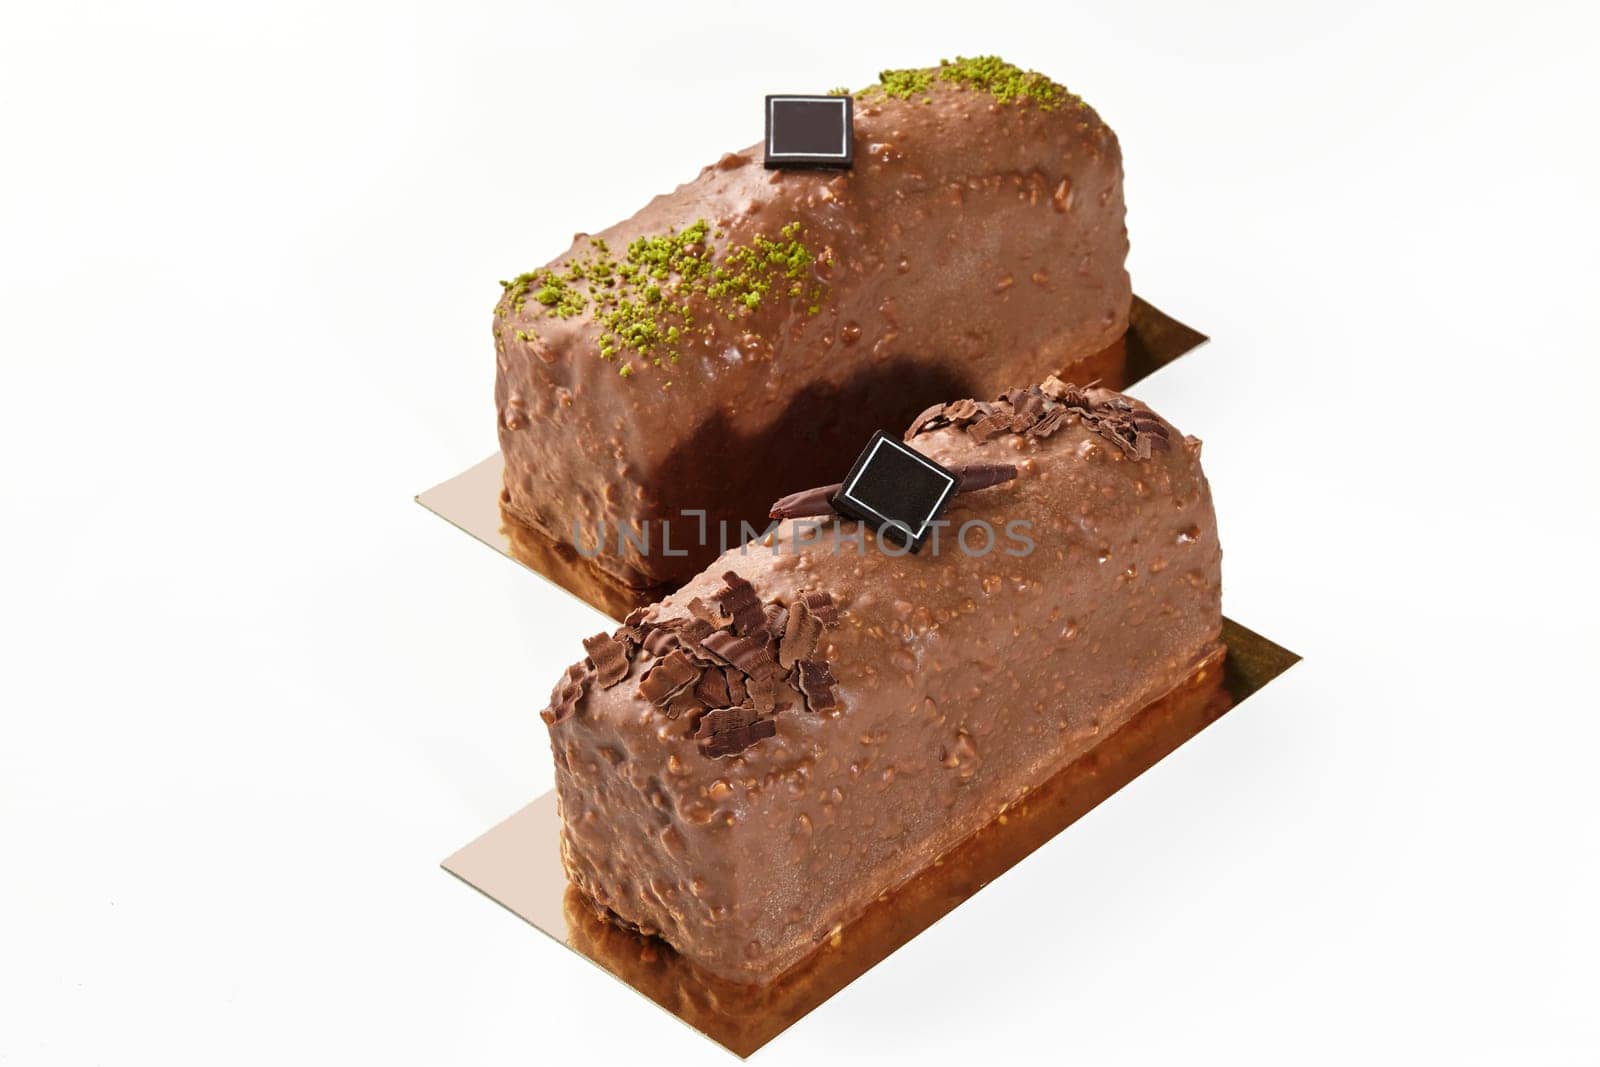 Artisanal sweet nutty chocolate cake bars on white background by nazarovsergey